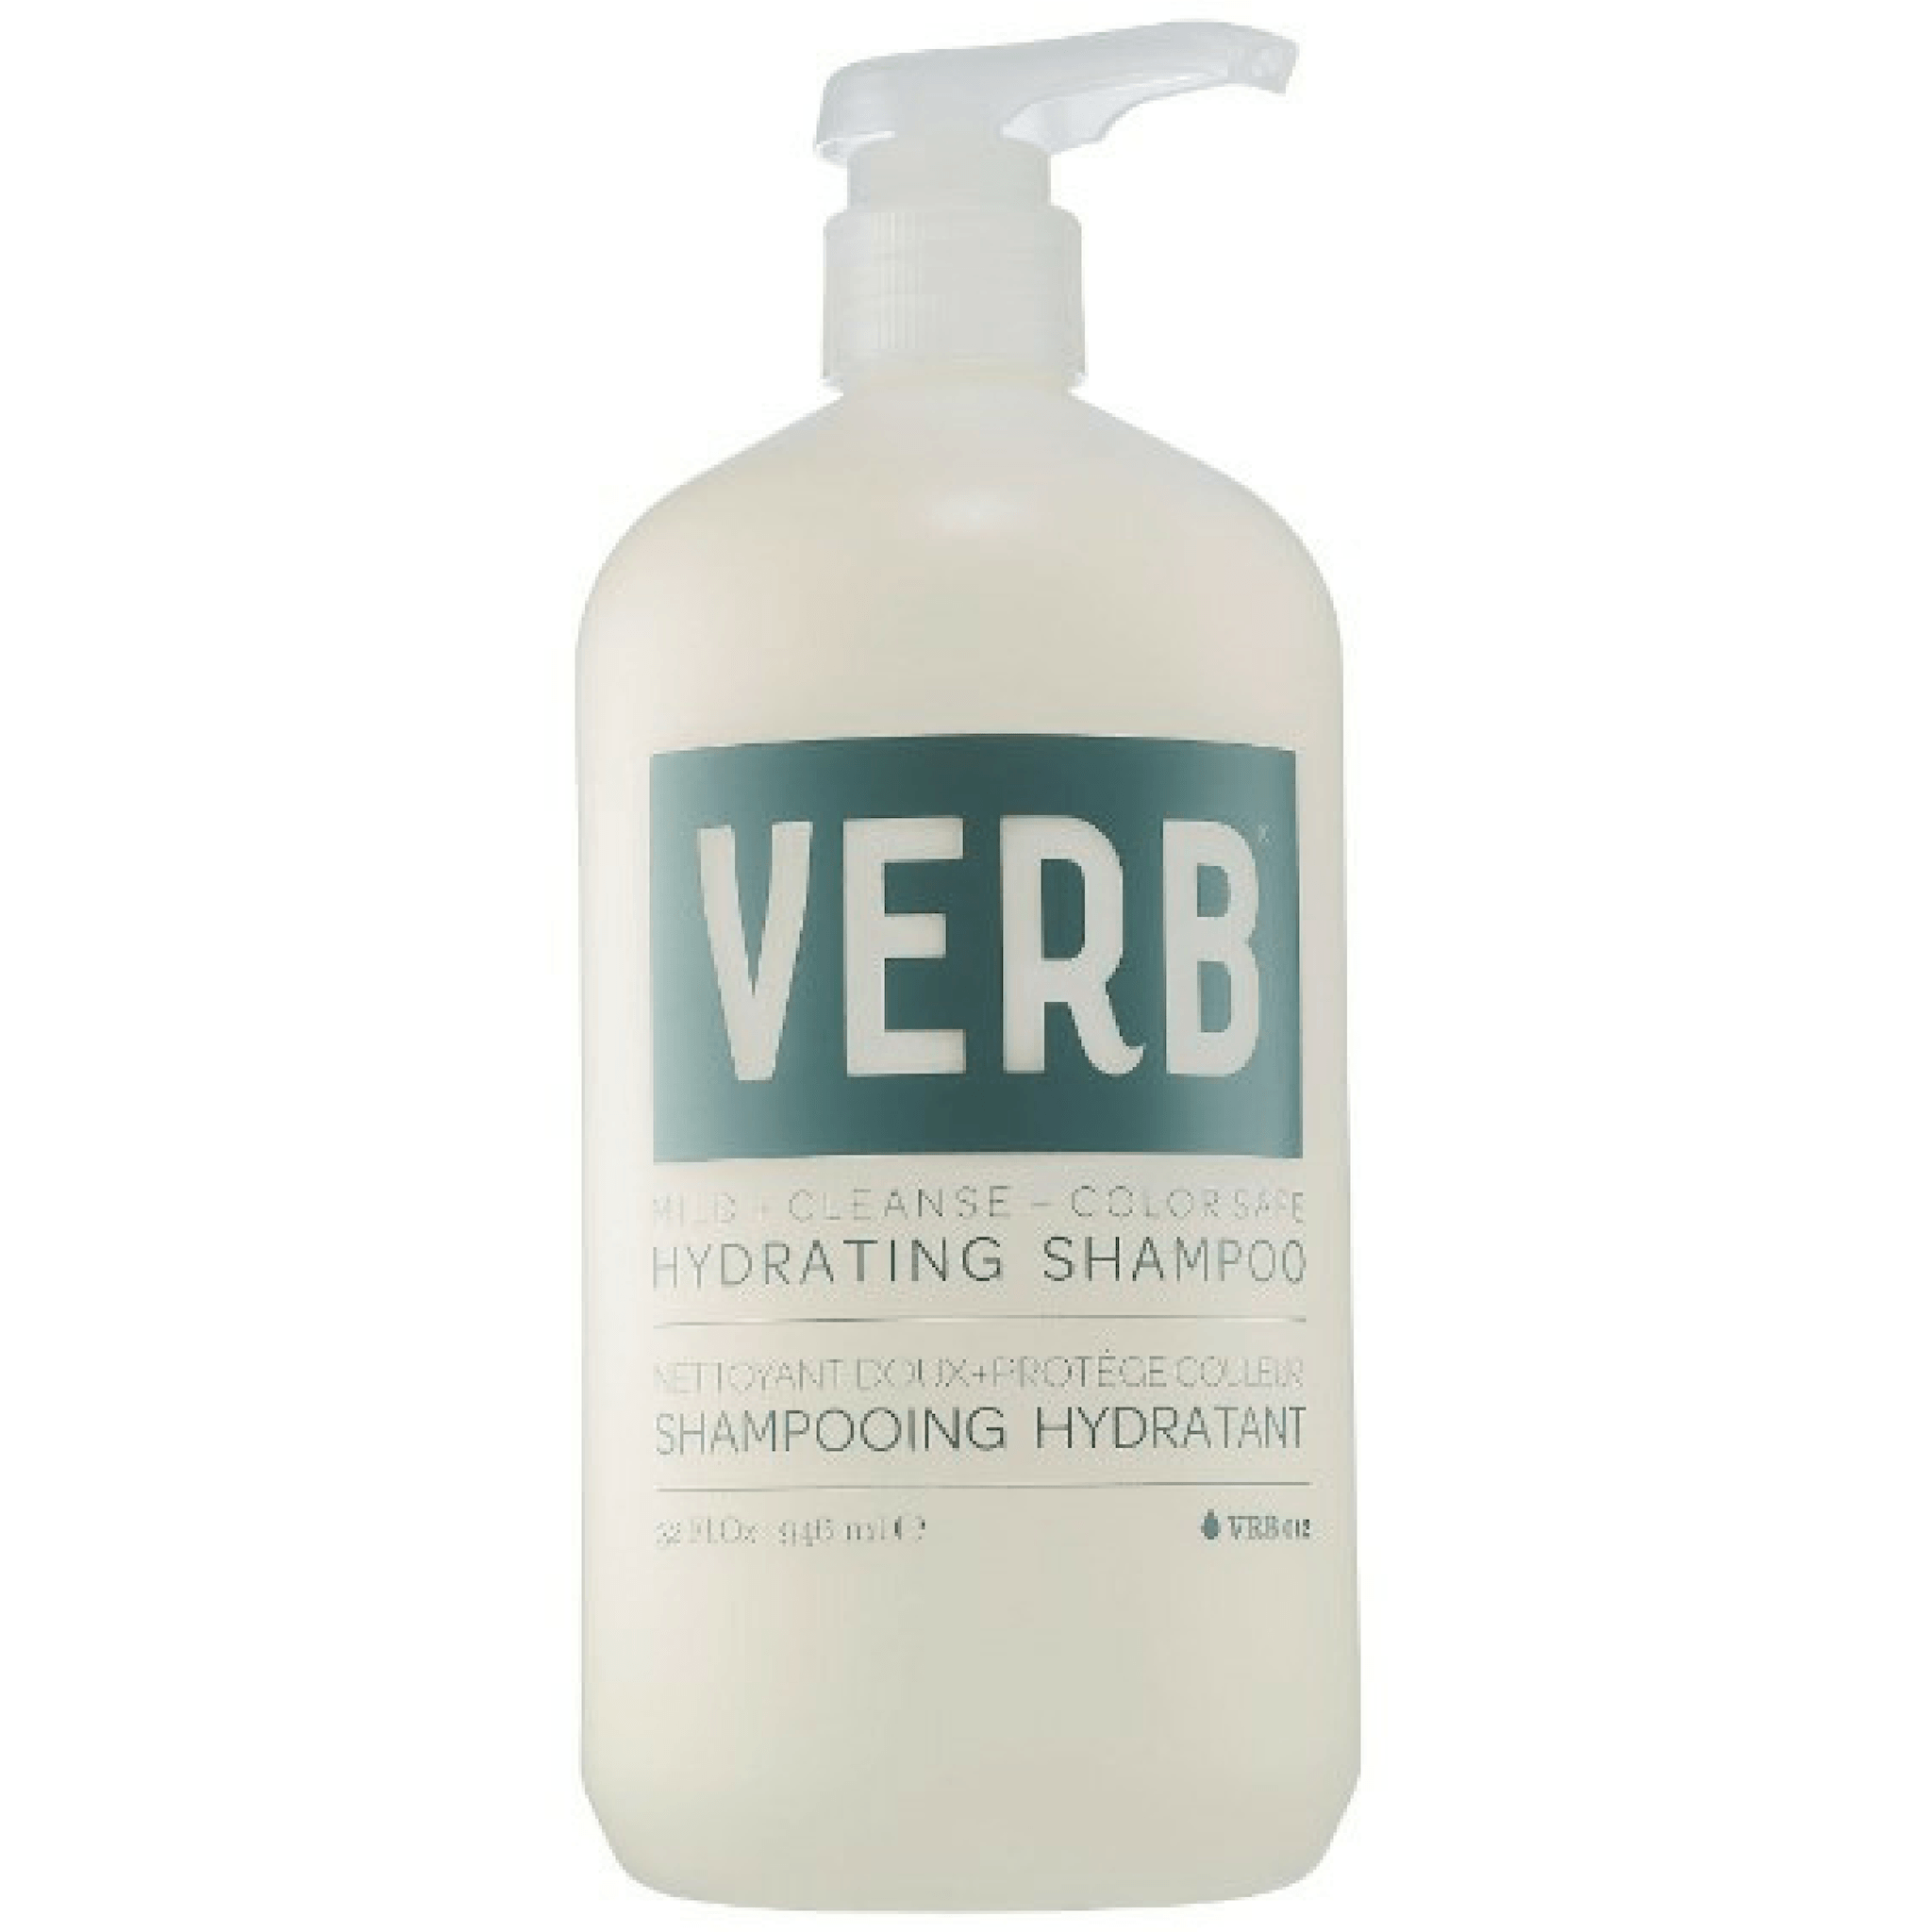 Verb. Shampoing hydratant - 946ml - Concept C. Shop